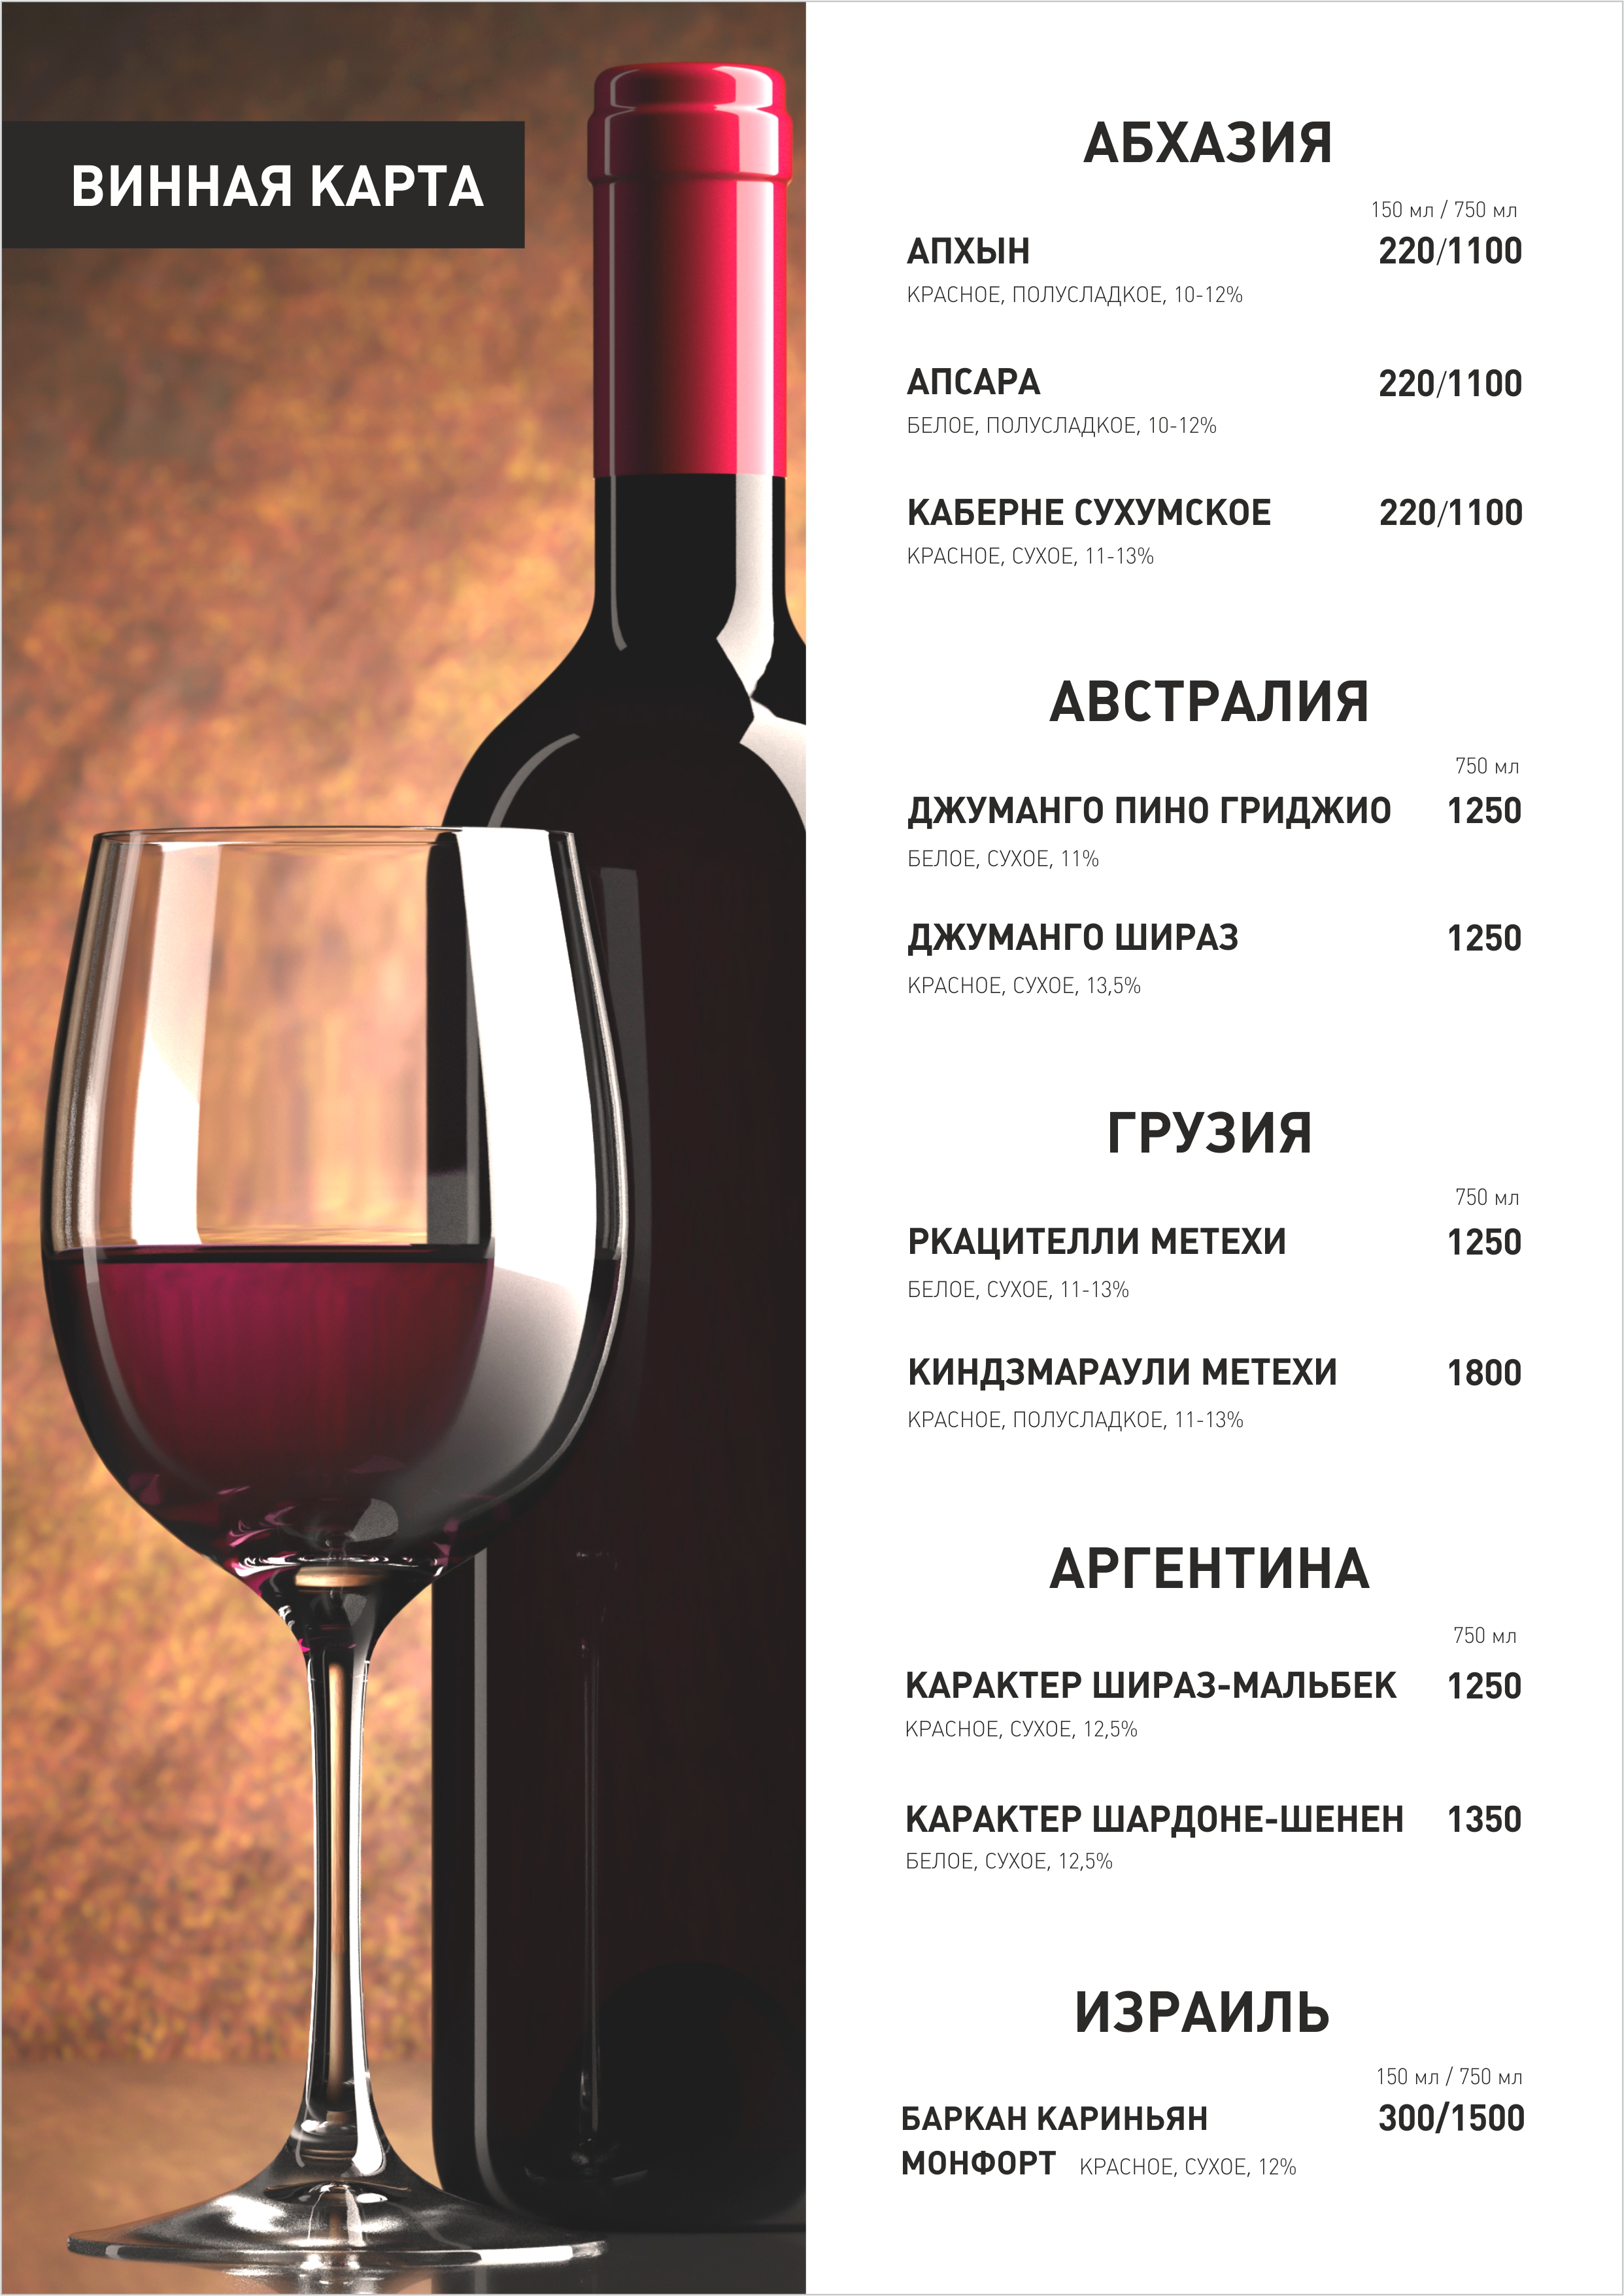 Vin москва. Карта вин ресторана образец. Винная карта ресторана. Винная карта меню. Меню вино.